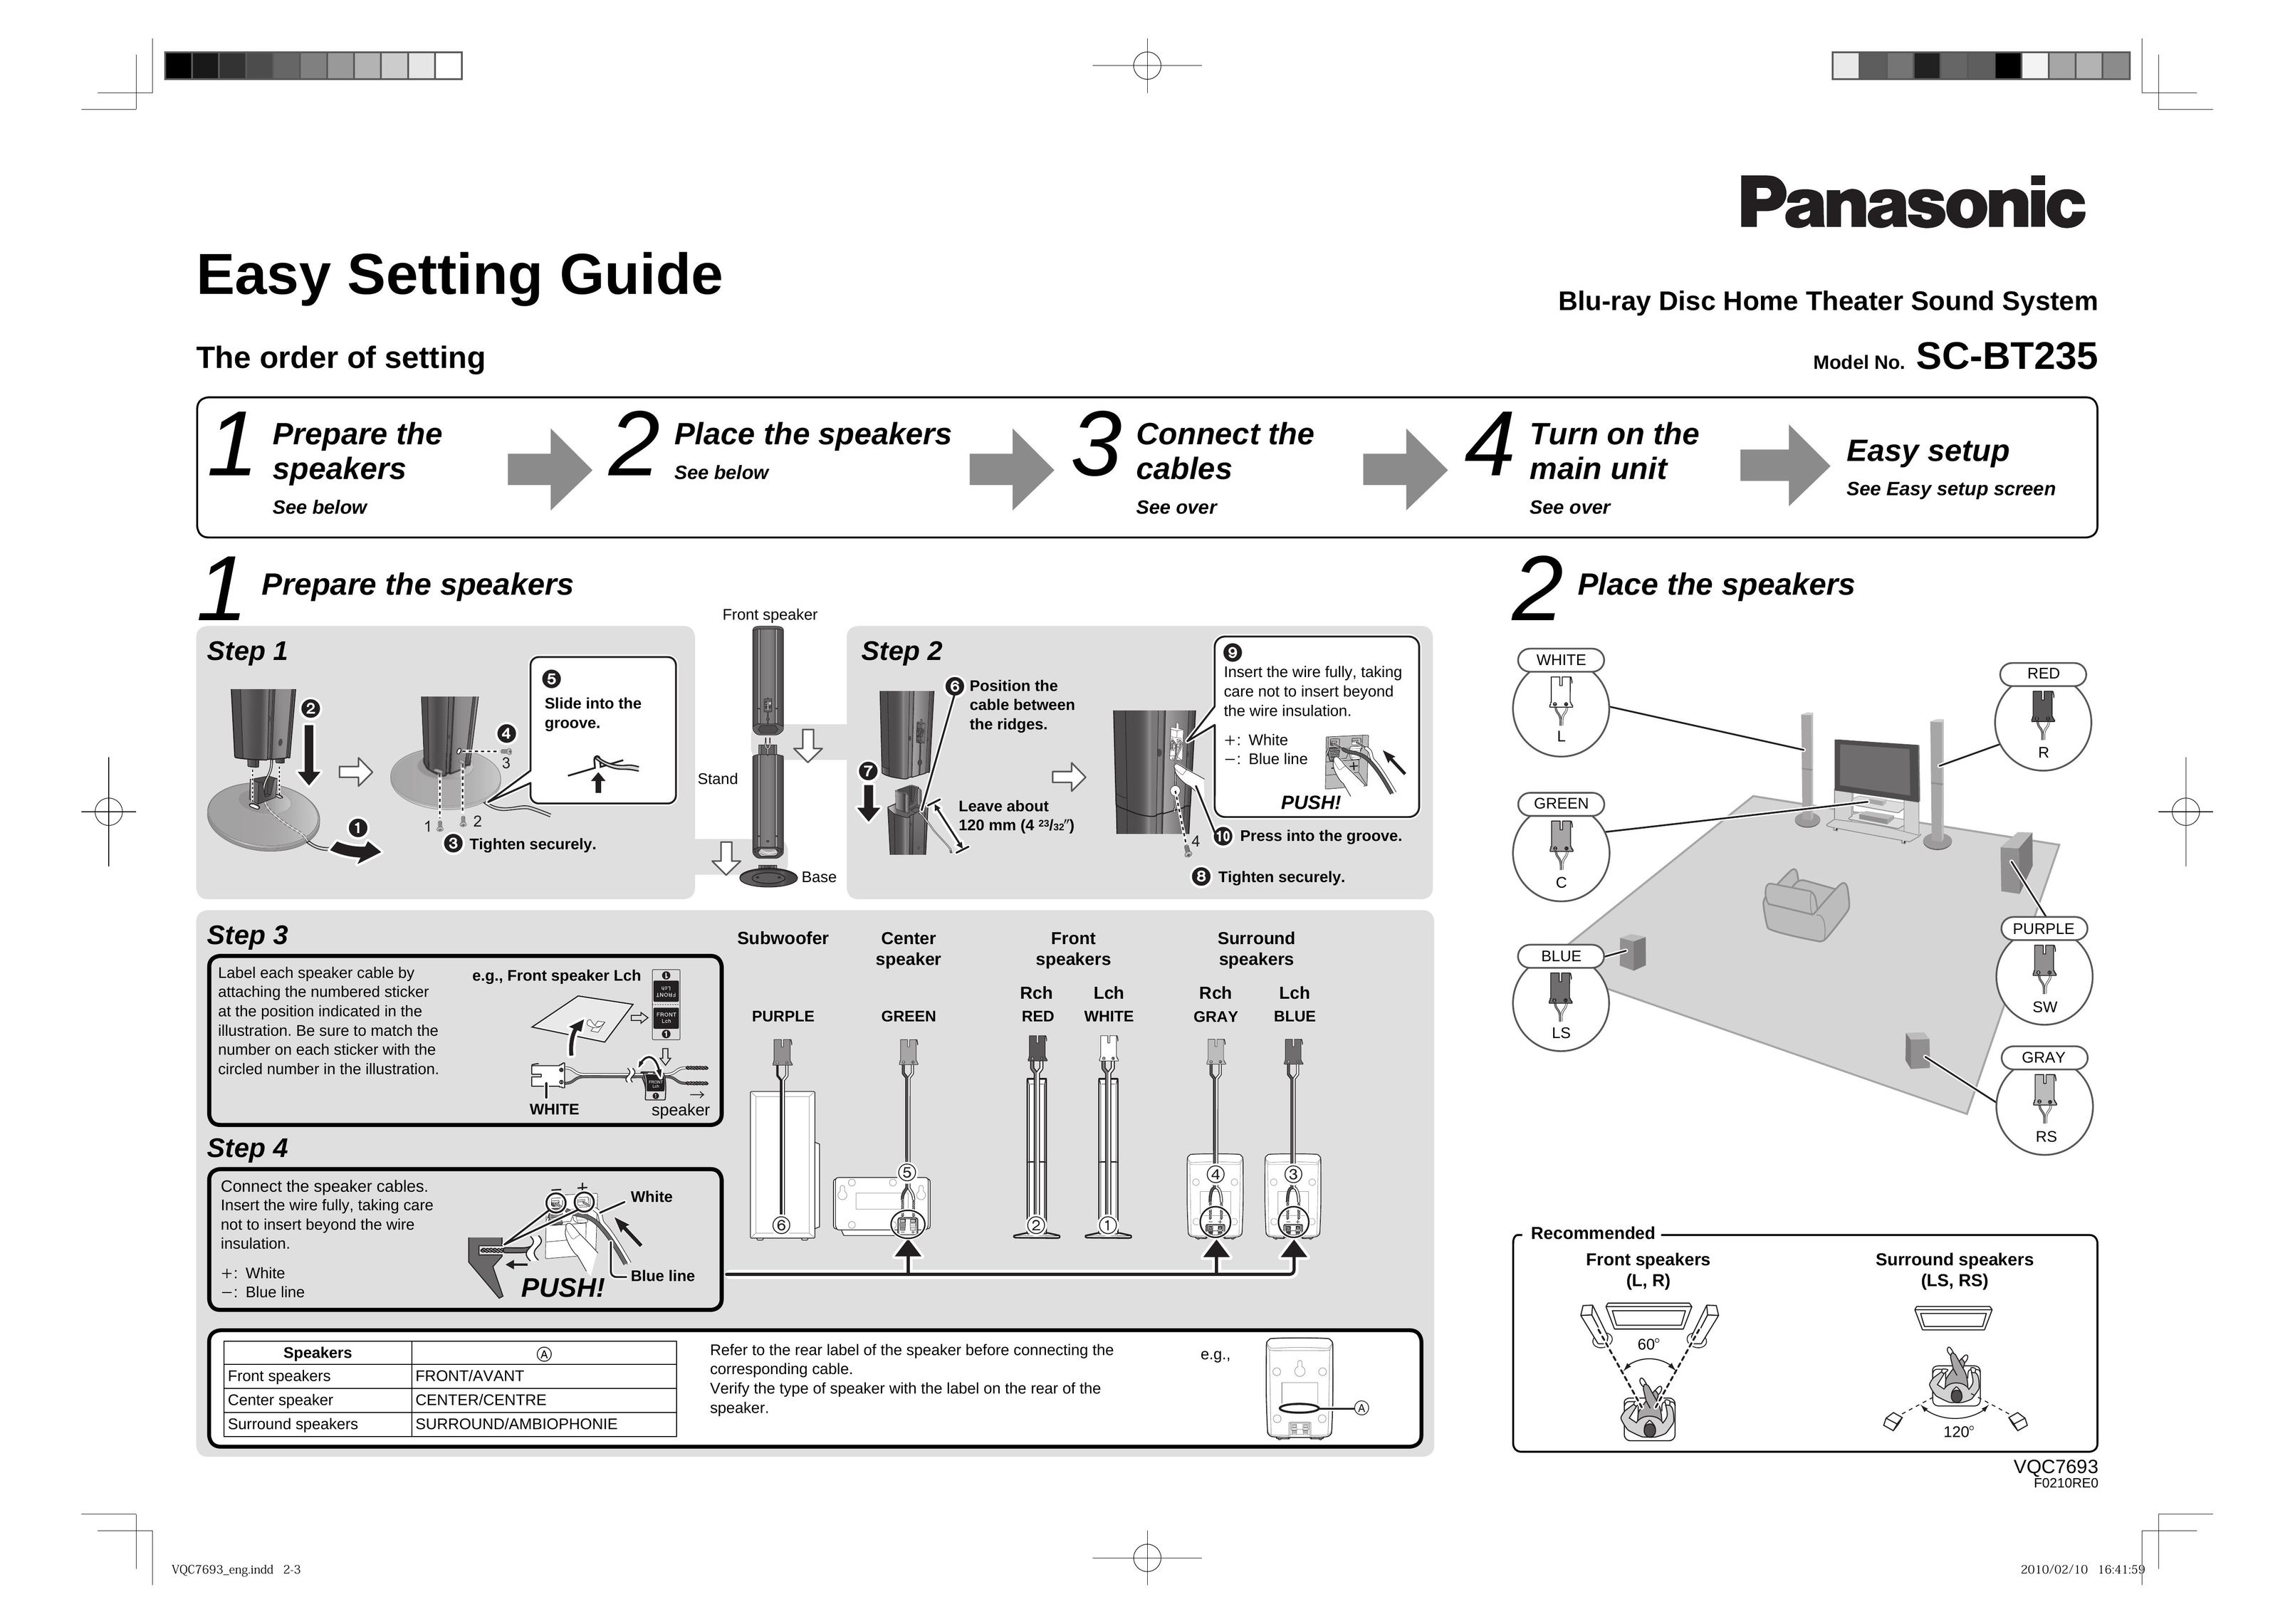 Panasonic SC-BT235 Home Theater System User Manual